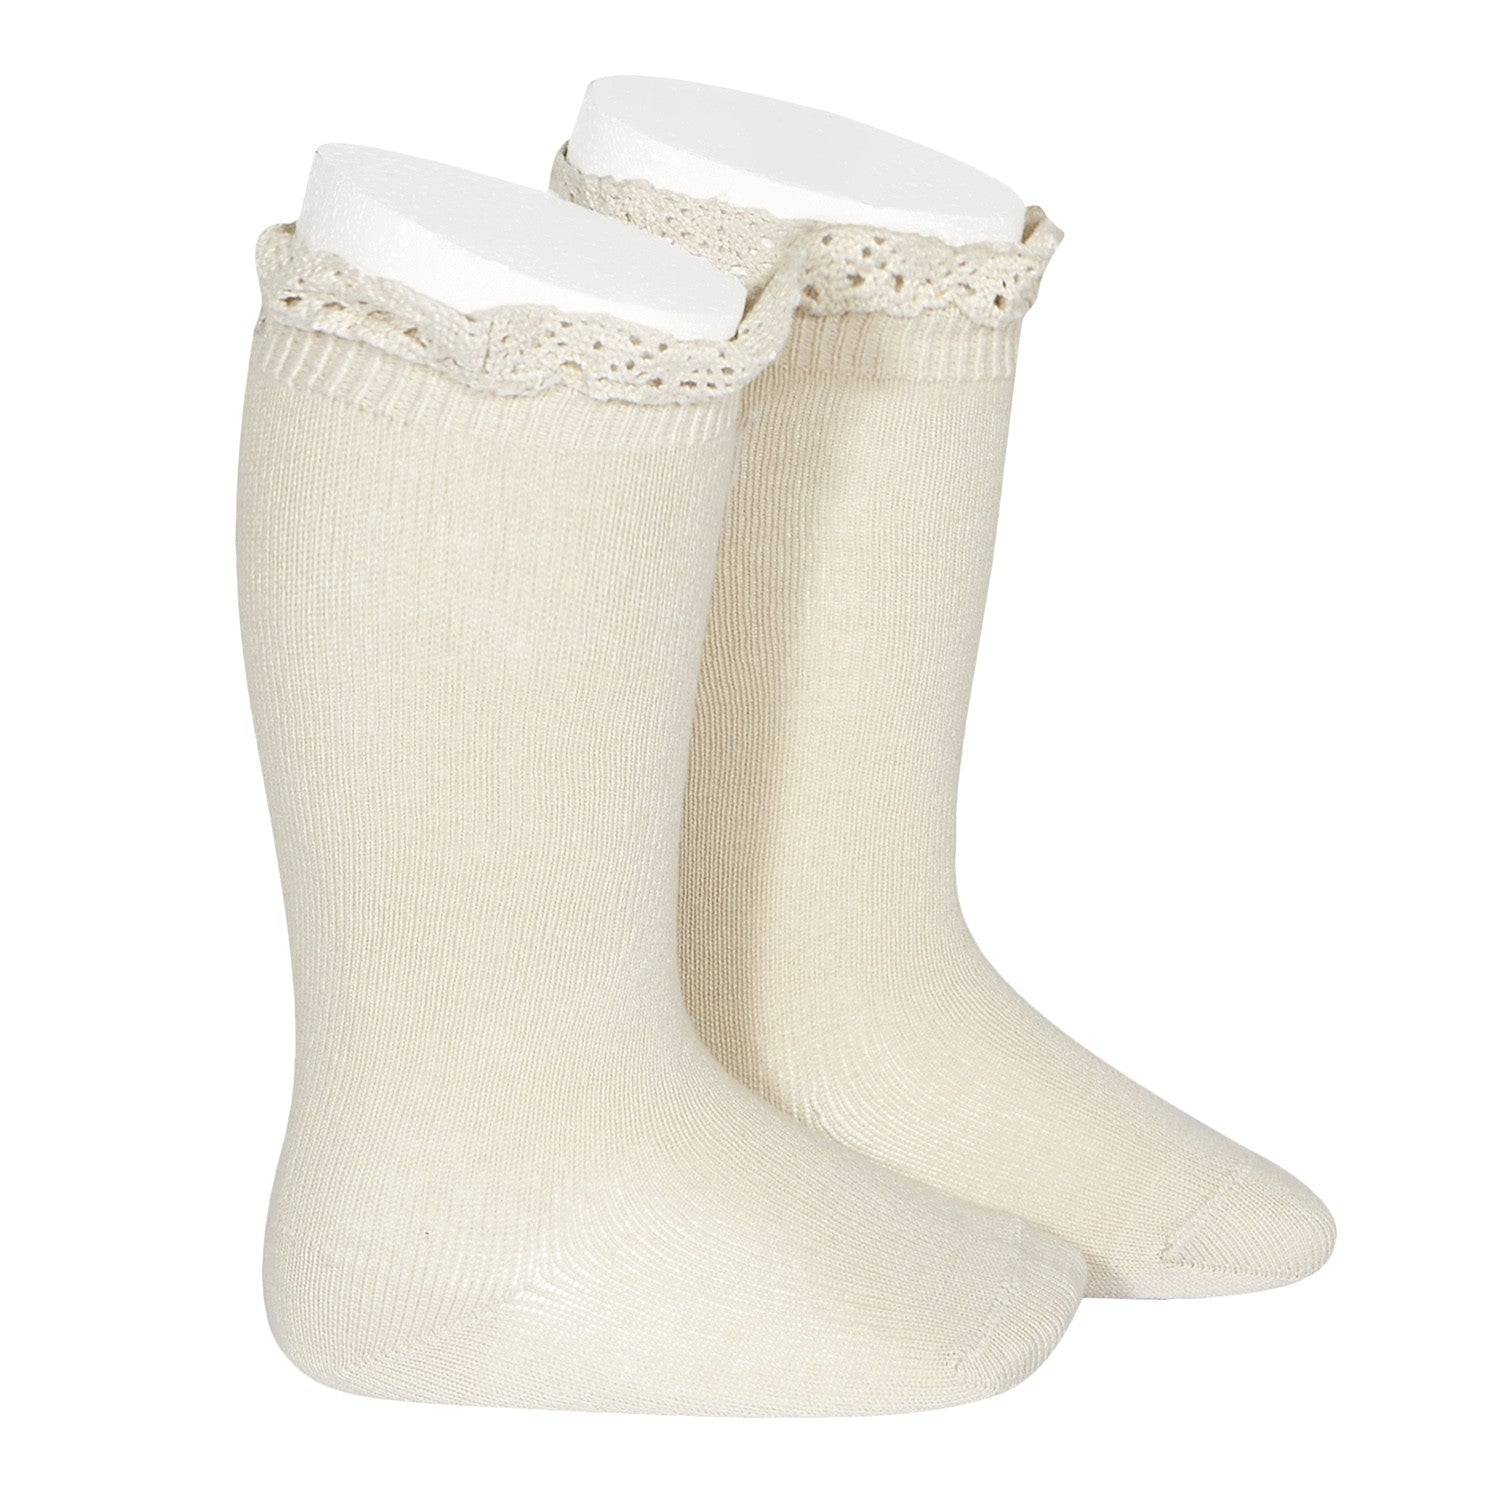 Socks Lino - Knee socks with lace edging cuf - 24092-304